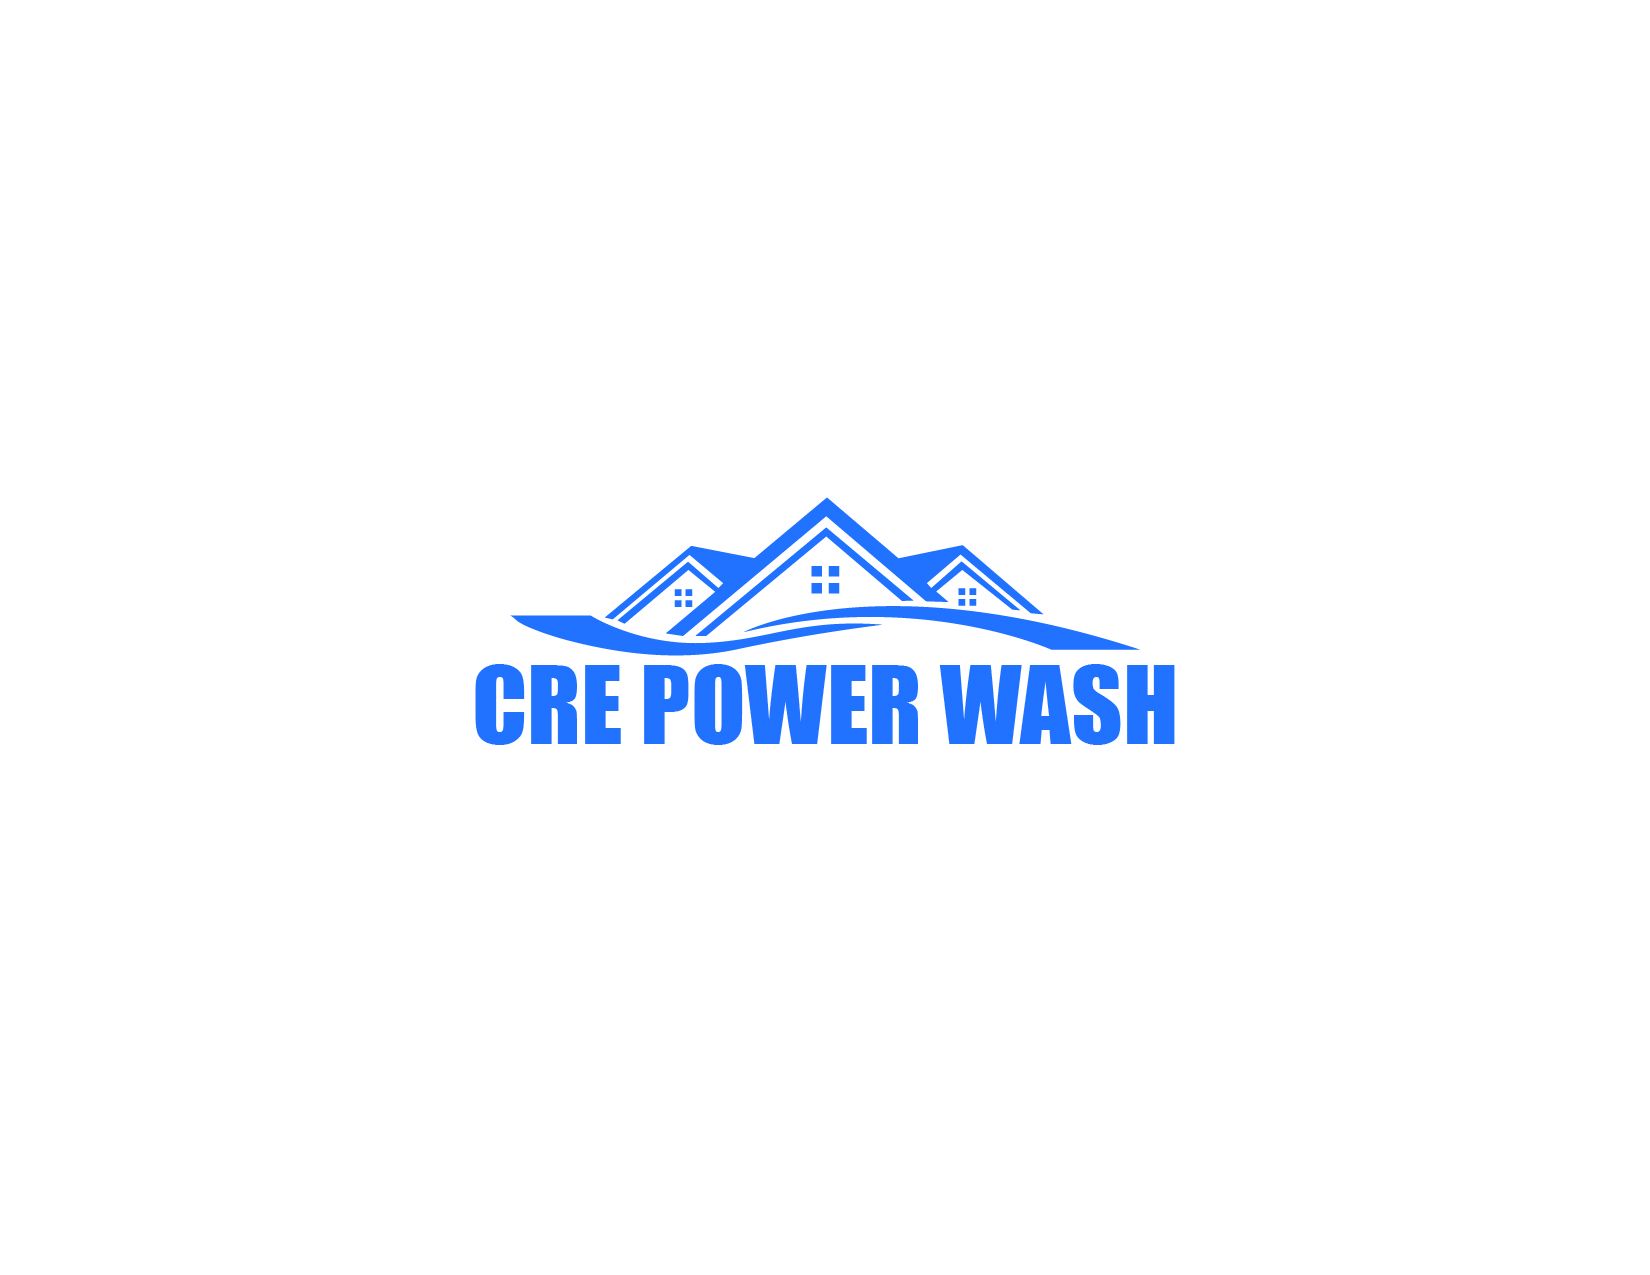 crePowerWash Logo